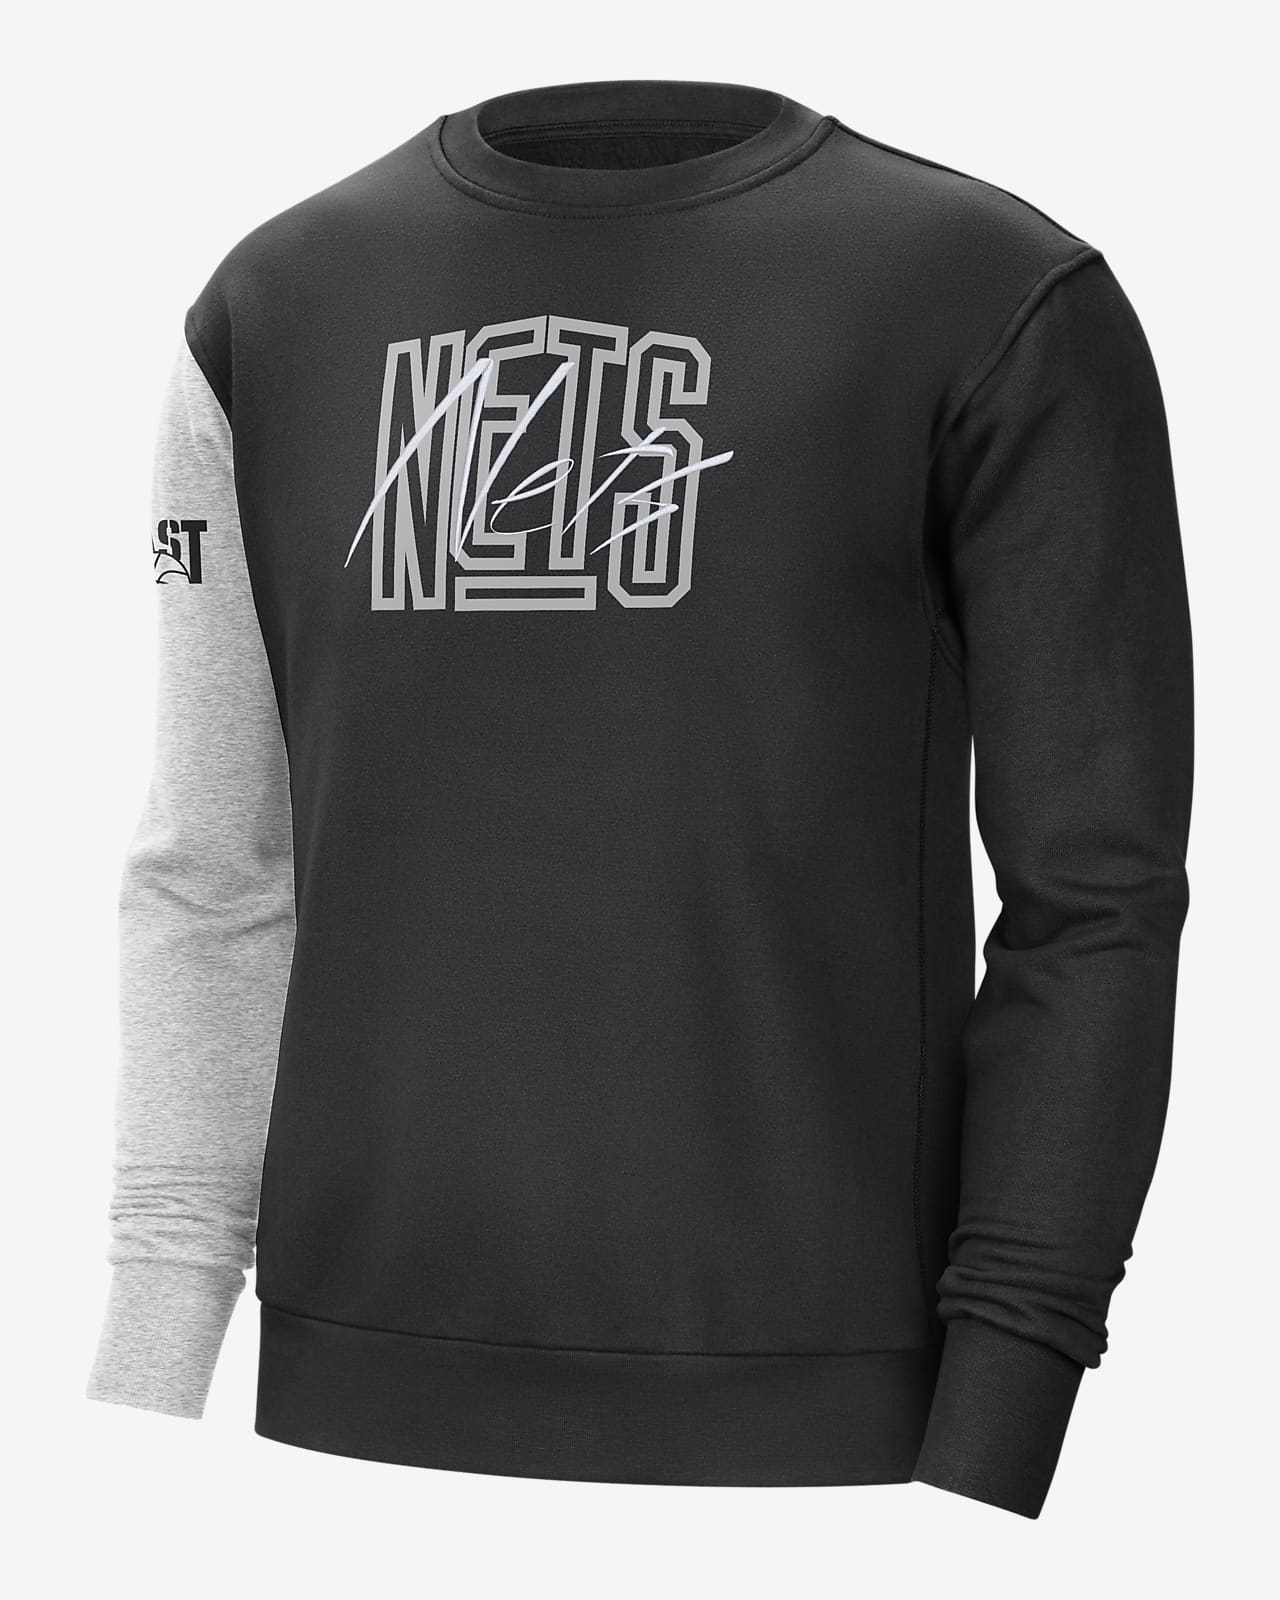 Nike Brooklyn Nets Courtside NBA T-Shirt Black - BLACK